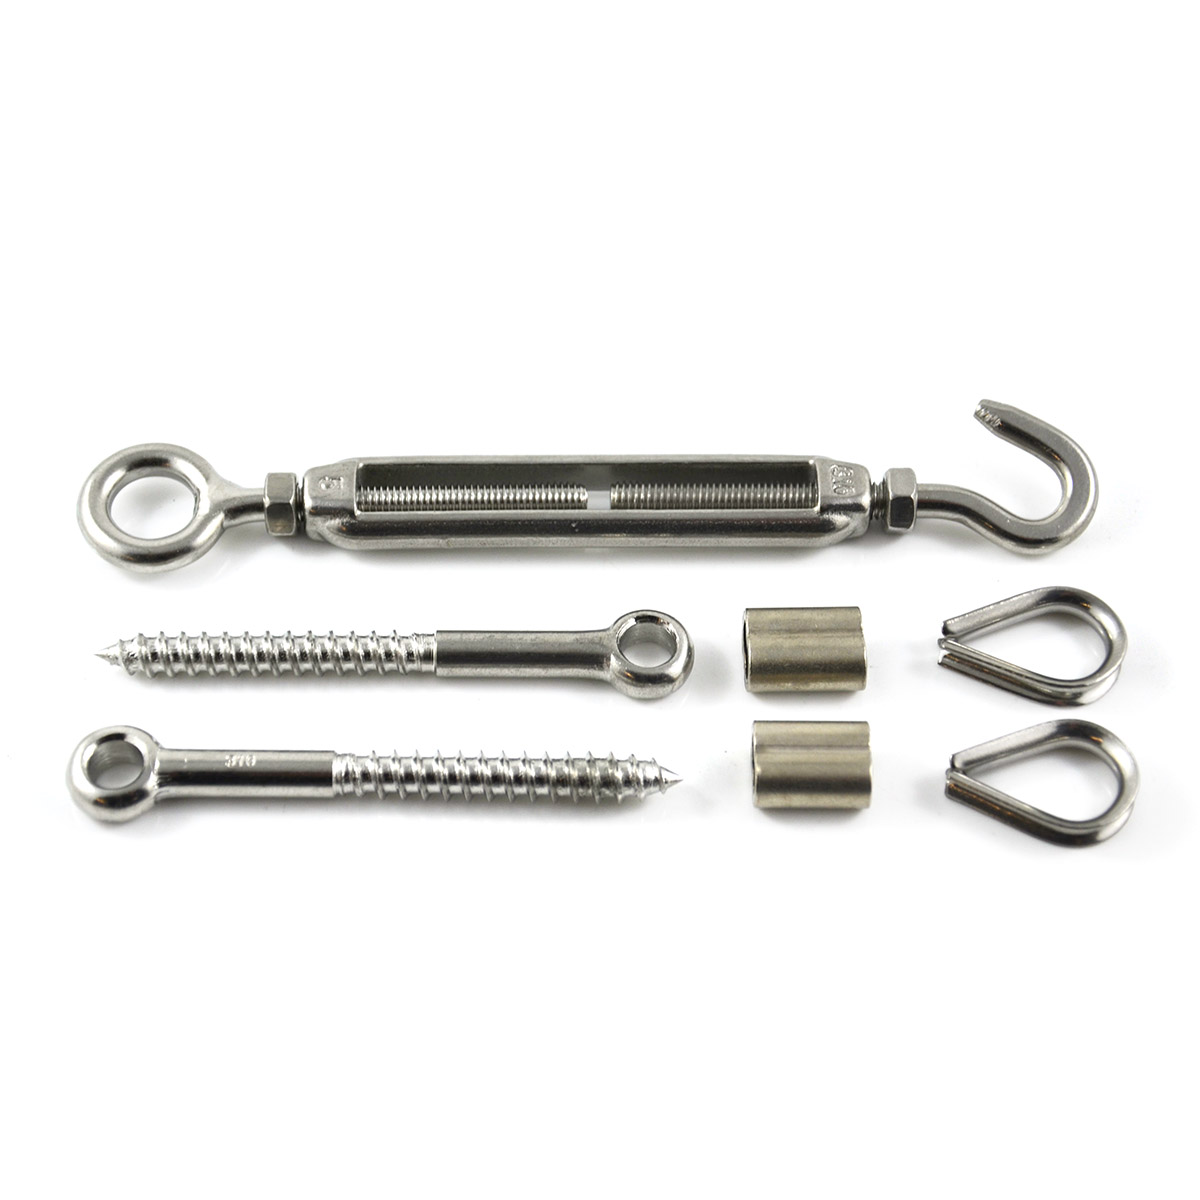 Stainless Steel Wire Rope Balustrade Kit - Eye/Hook Turnbuckle Kit #3